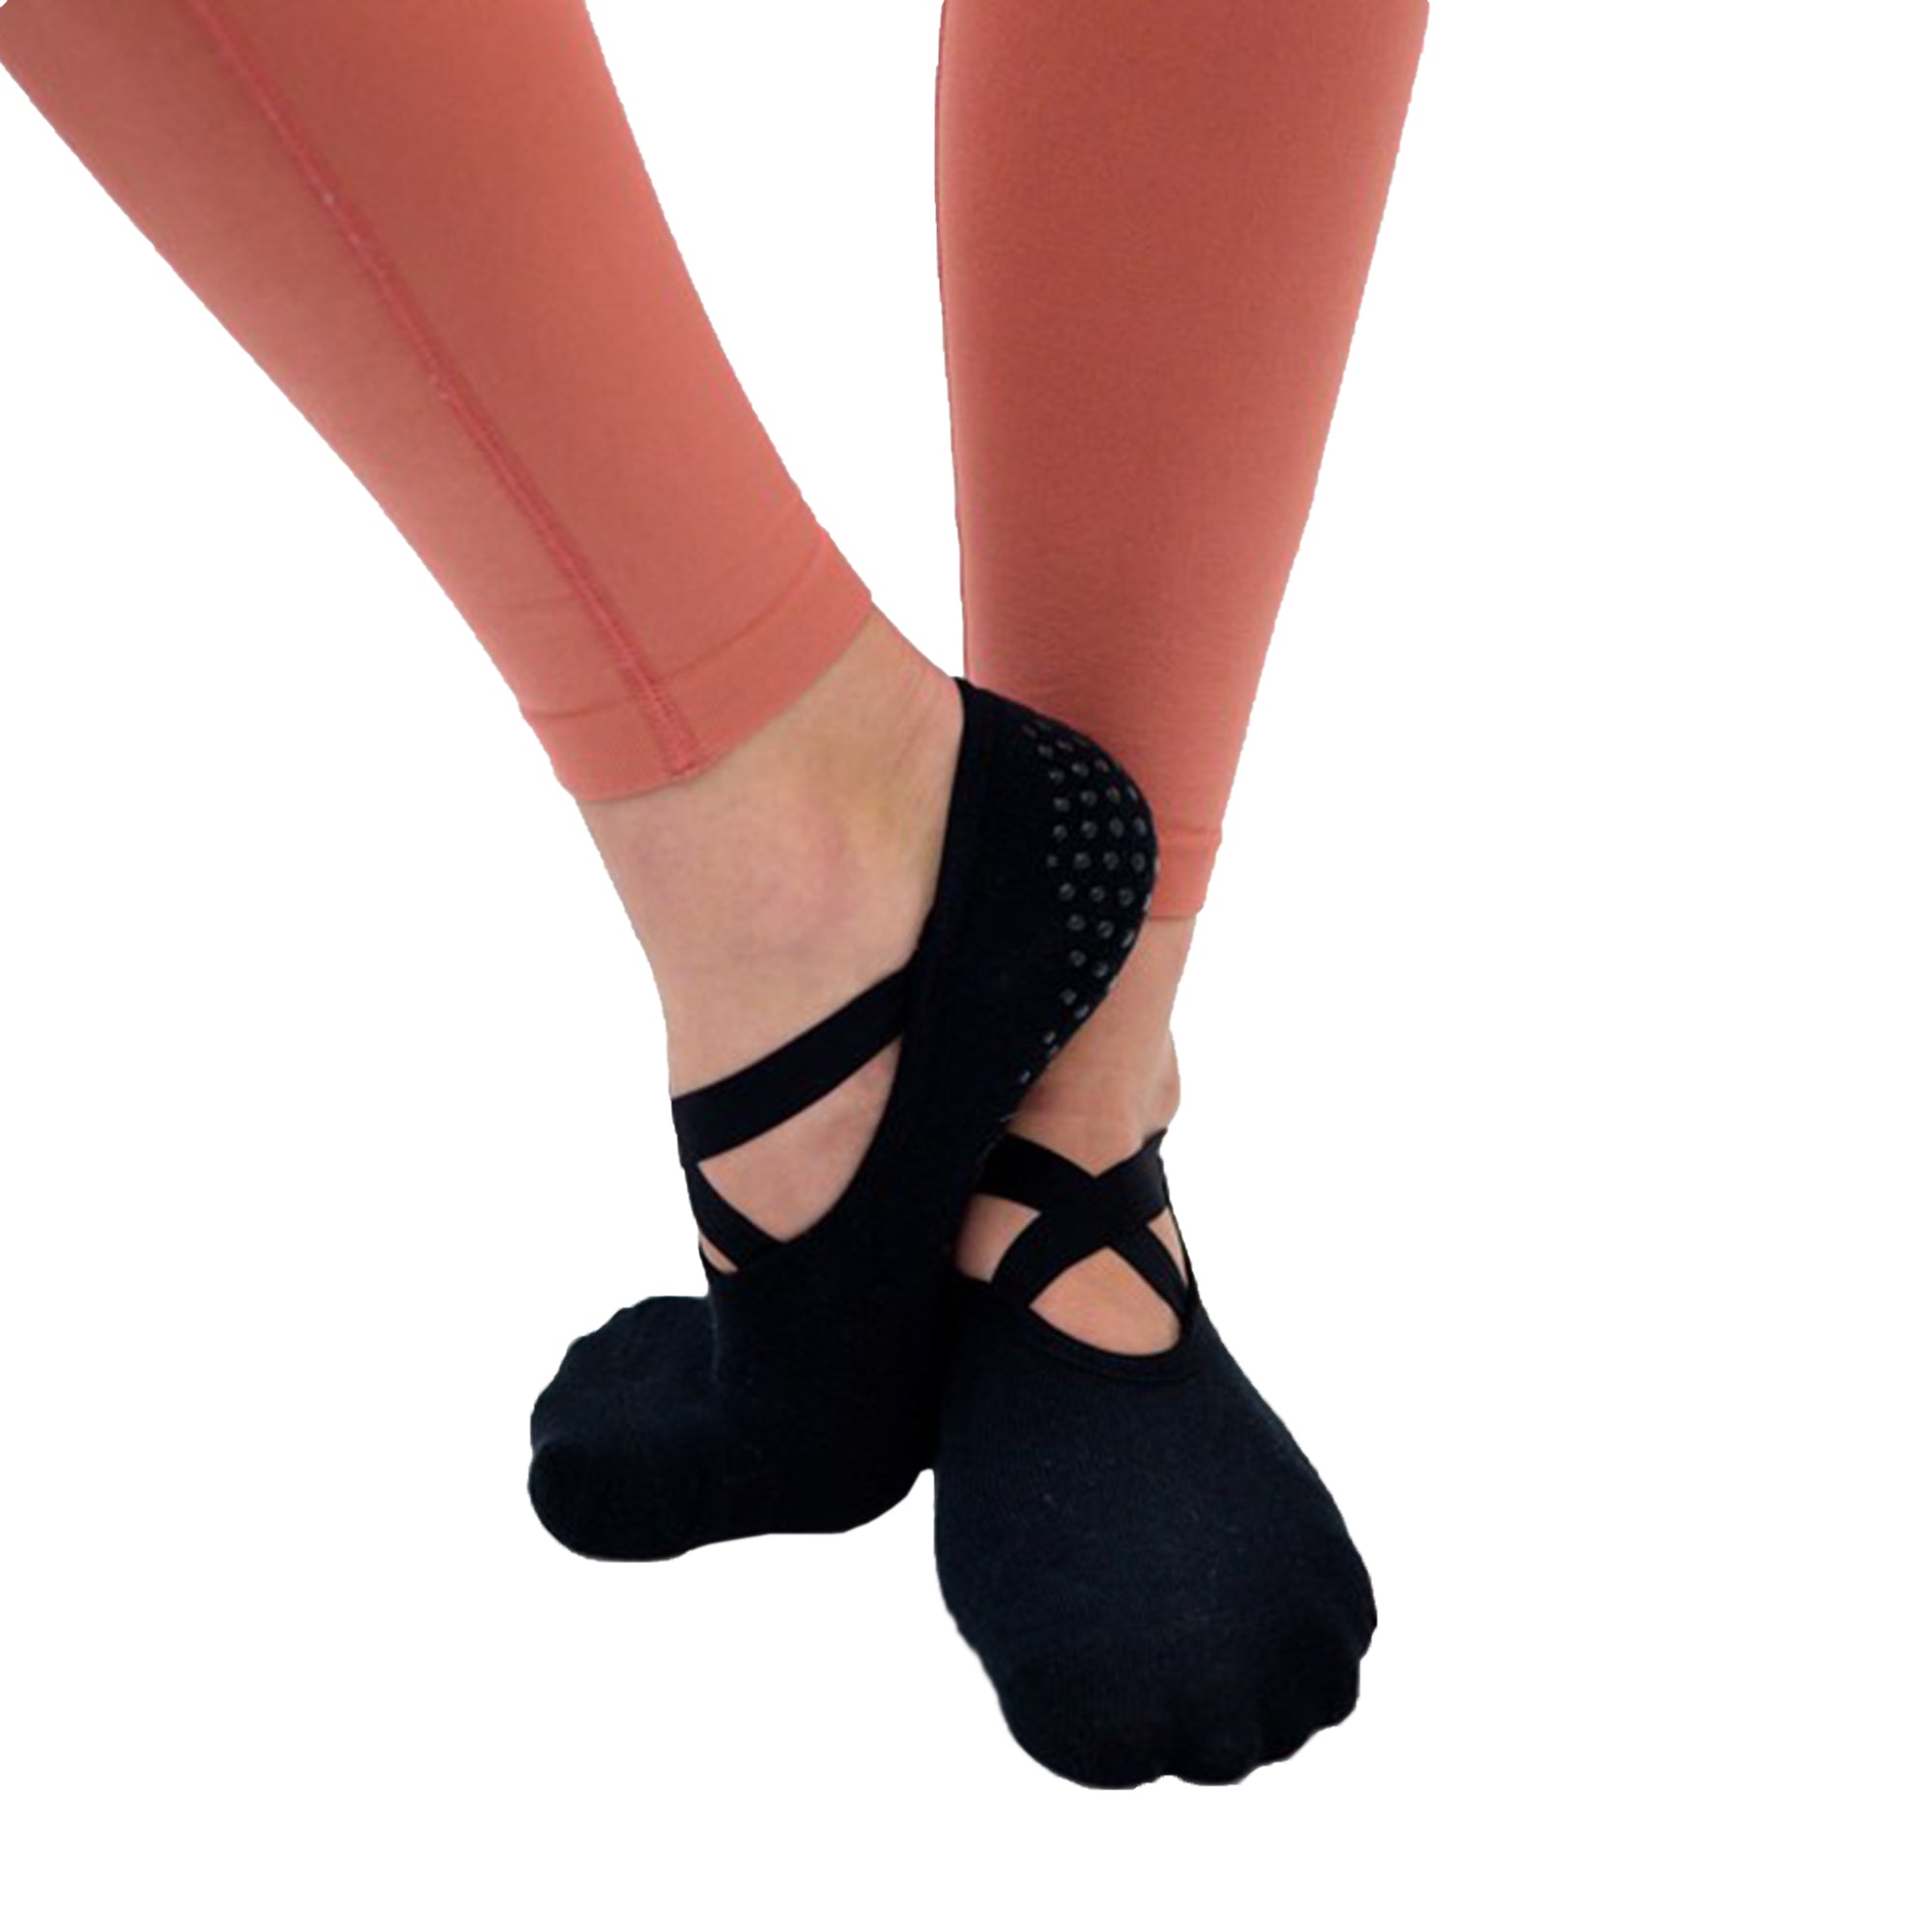 Buy HURRYSHOPPY Black & Colorful Yoga Socks for Women Girls Workout Non Slip  Anti Skid for Pilates, Pure Barre, Ballet, Dance, Barefoot Sport Fitness  Gym (Pack of 1) (RAINBOW) at